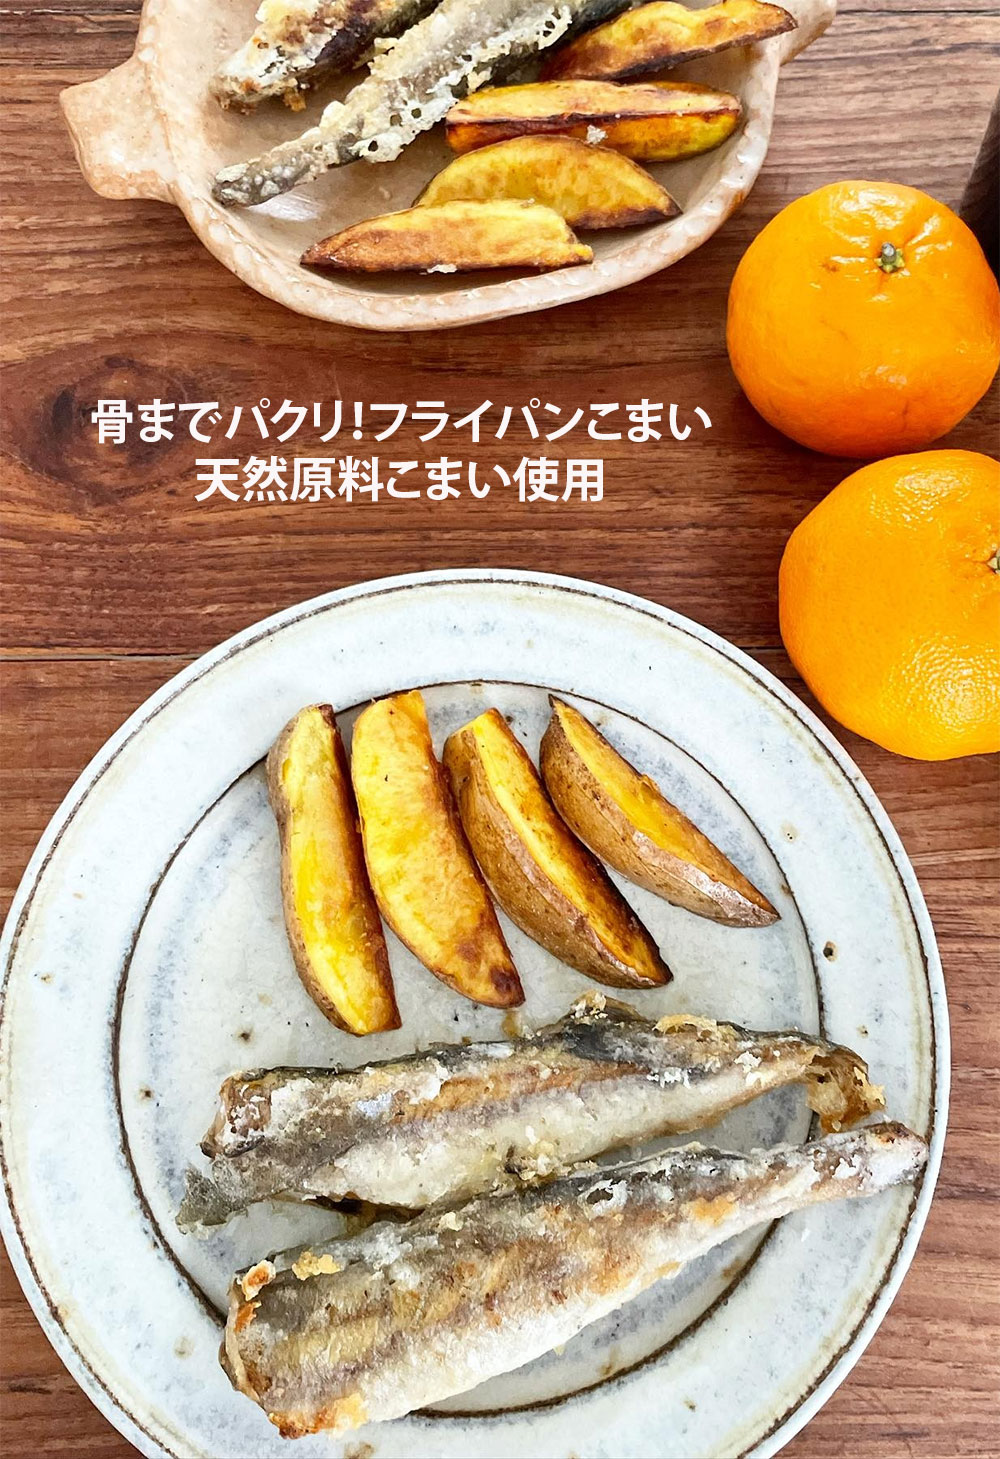 SL Creations Deep-fried Saffron Cod with Bones [Japan Imported] 160g